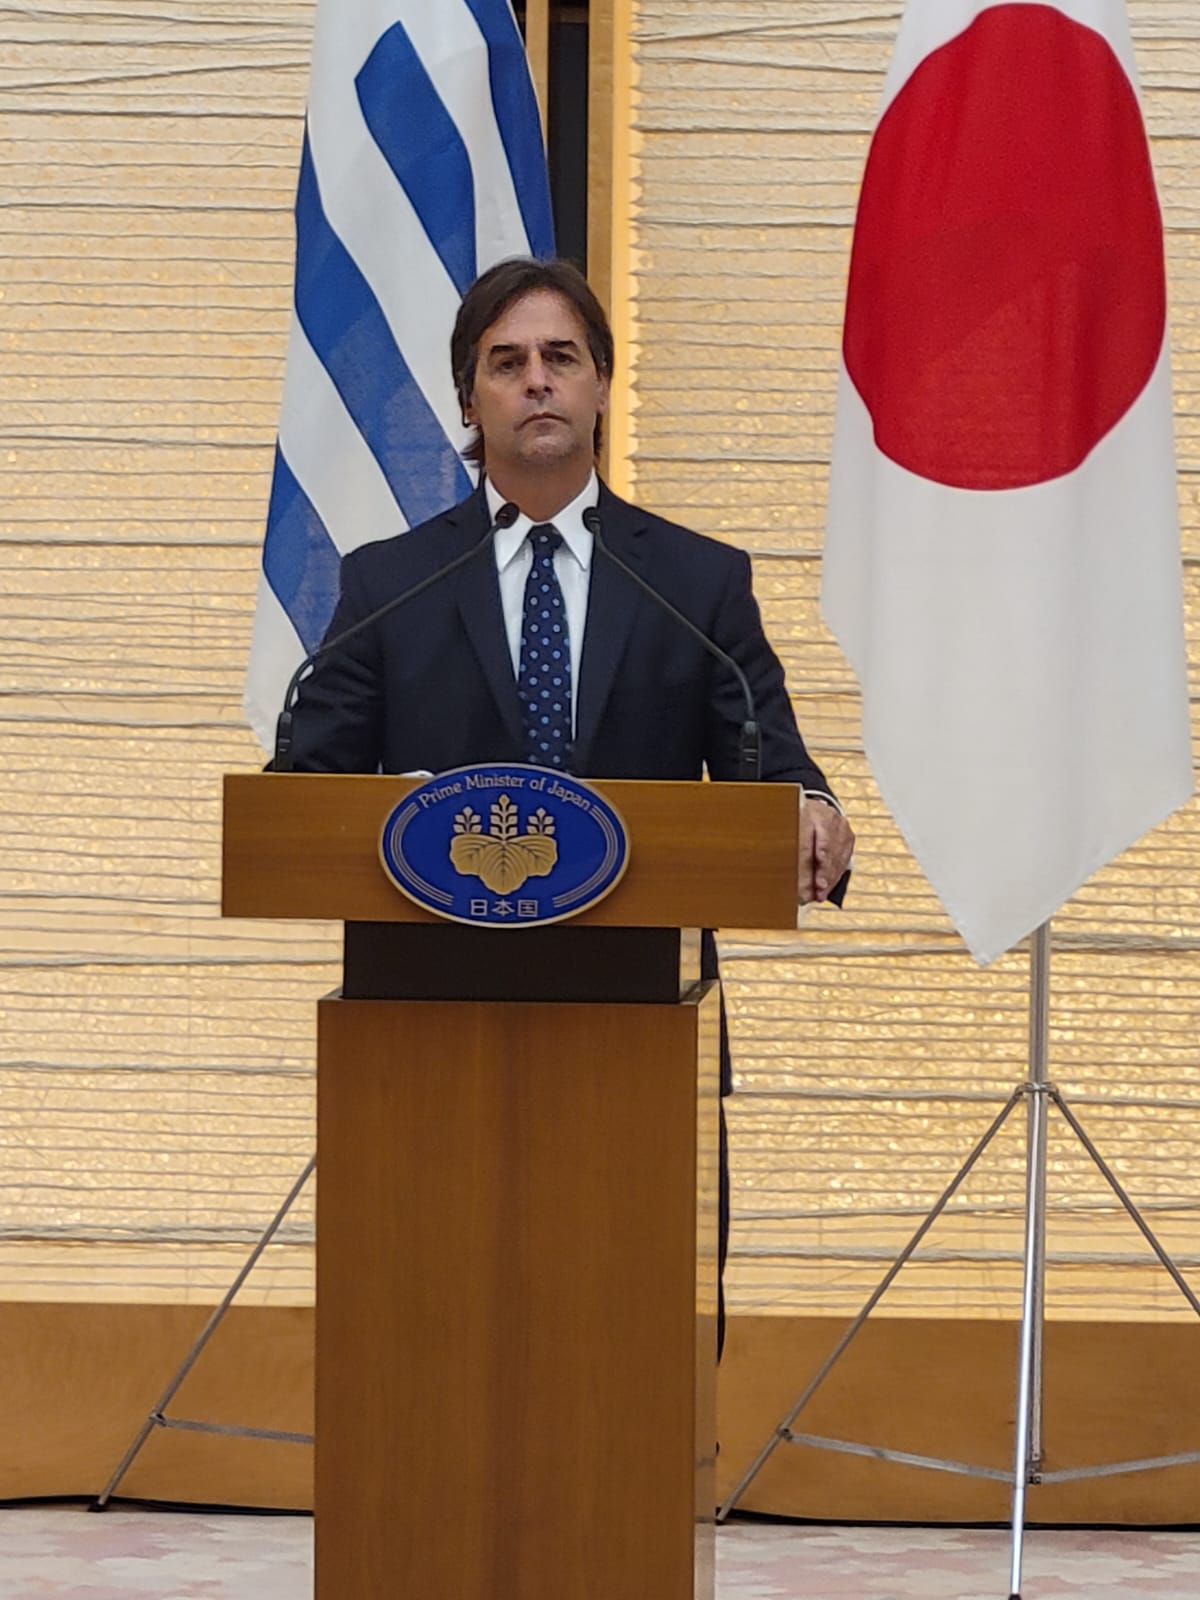 Japan-Uruguay Joint Statement